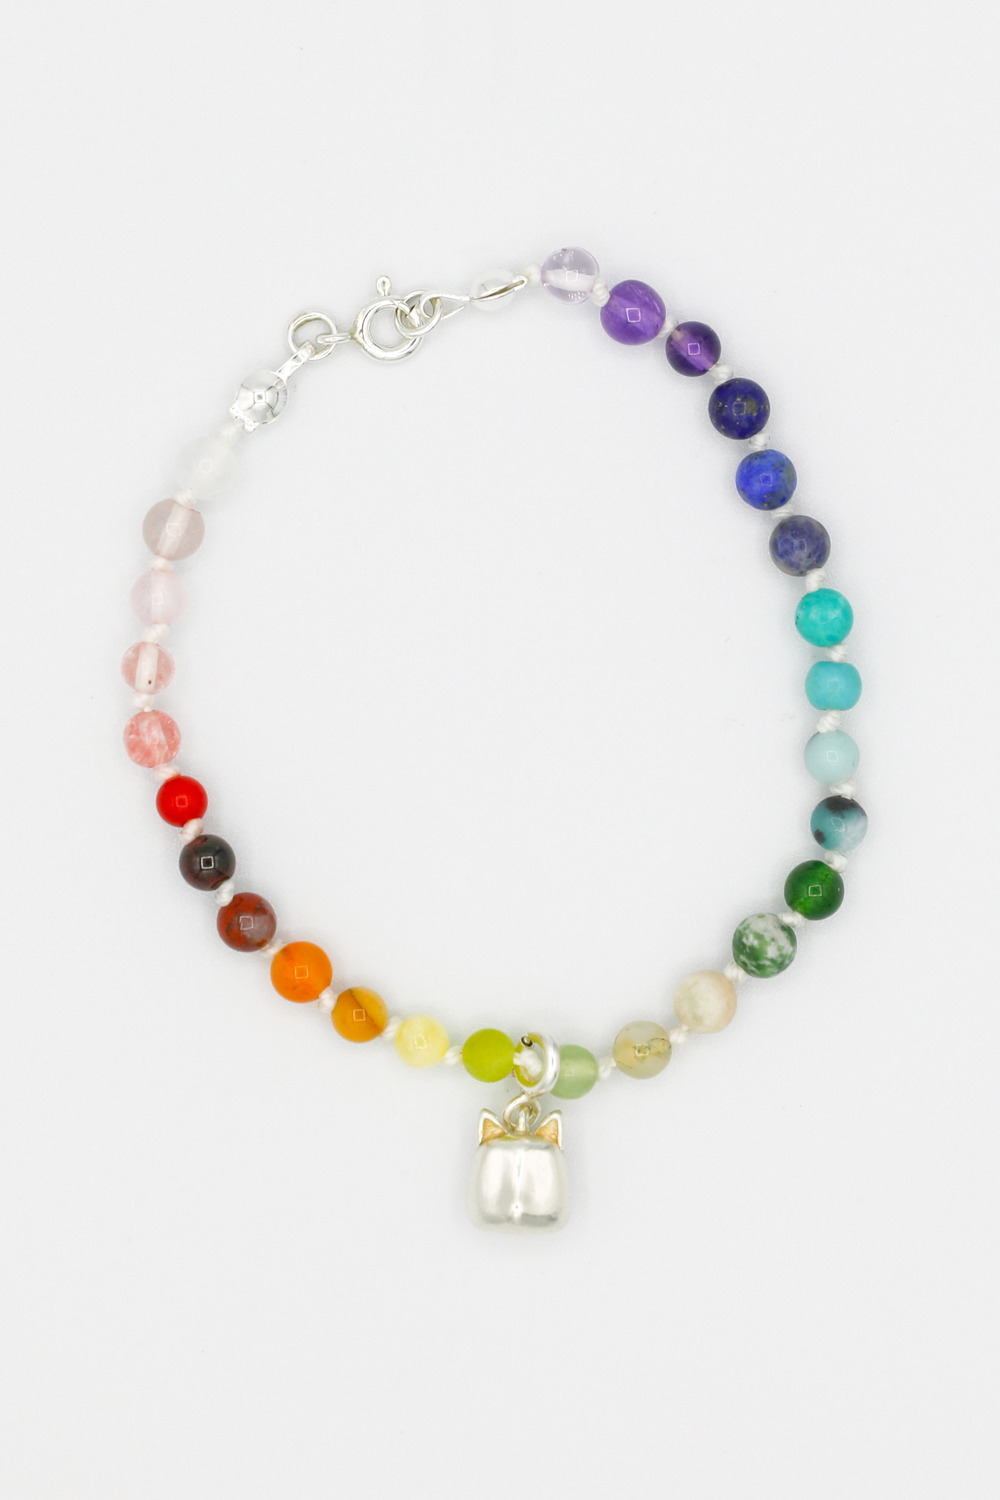 The Petite Cat Rainbow Knotted Bracelet